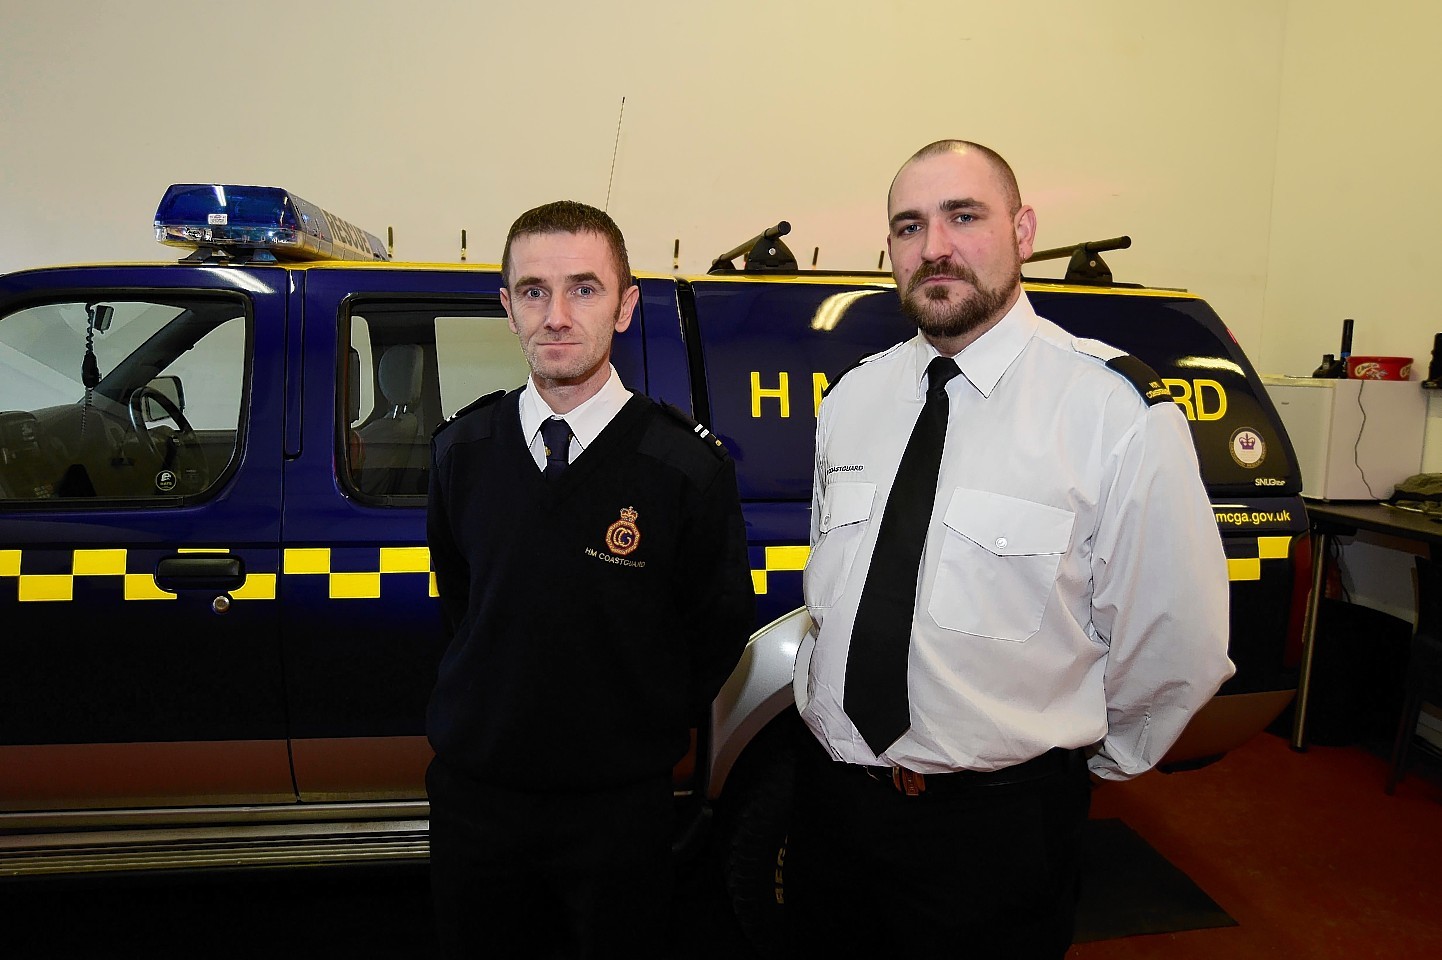 Fraserburgh Coastguard officers Darren Scott and Martin Stephen.